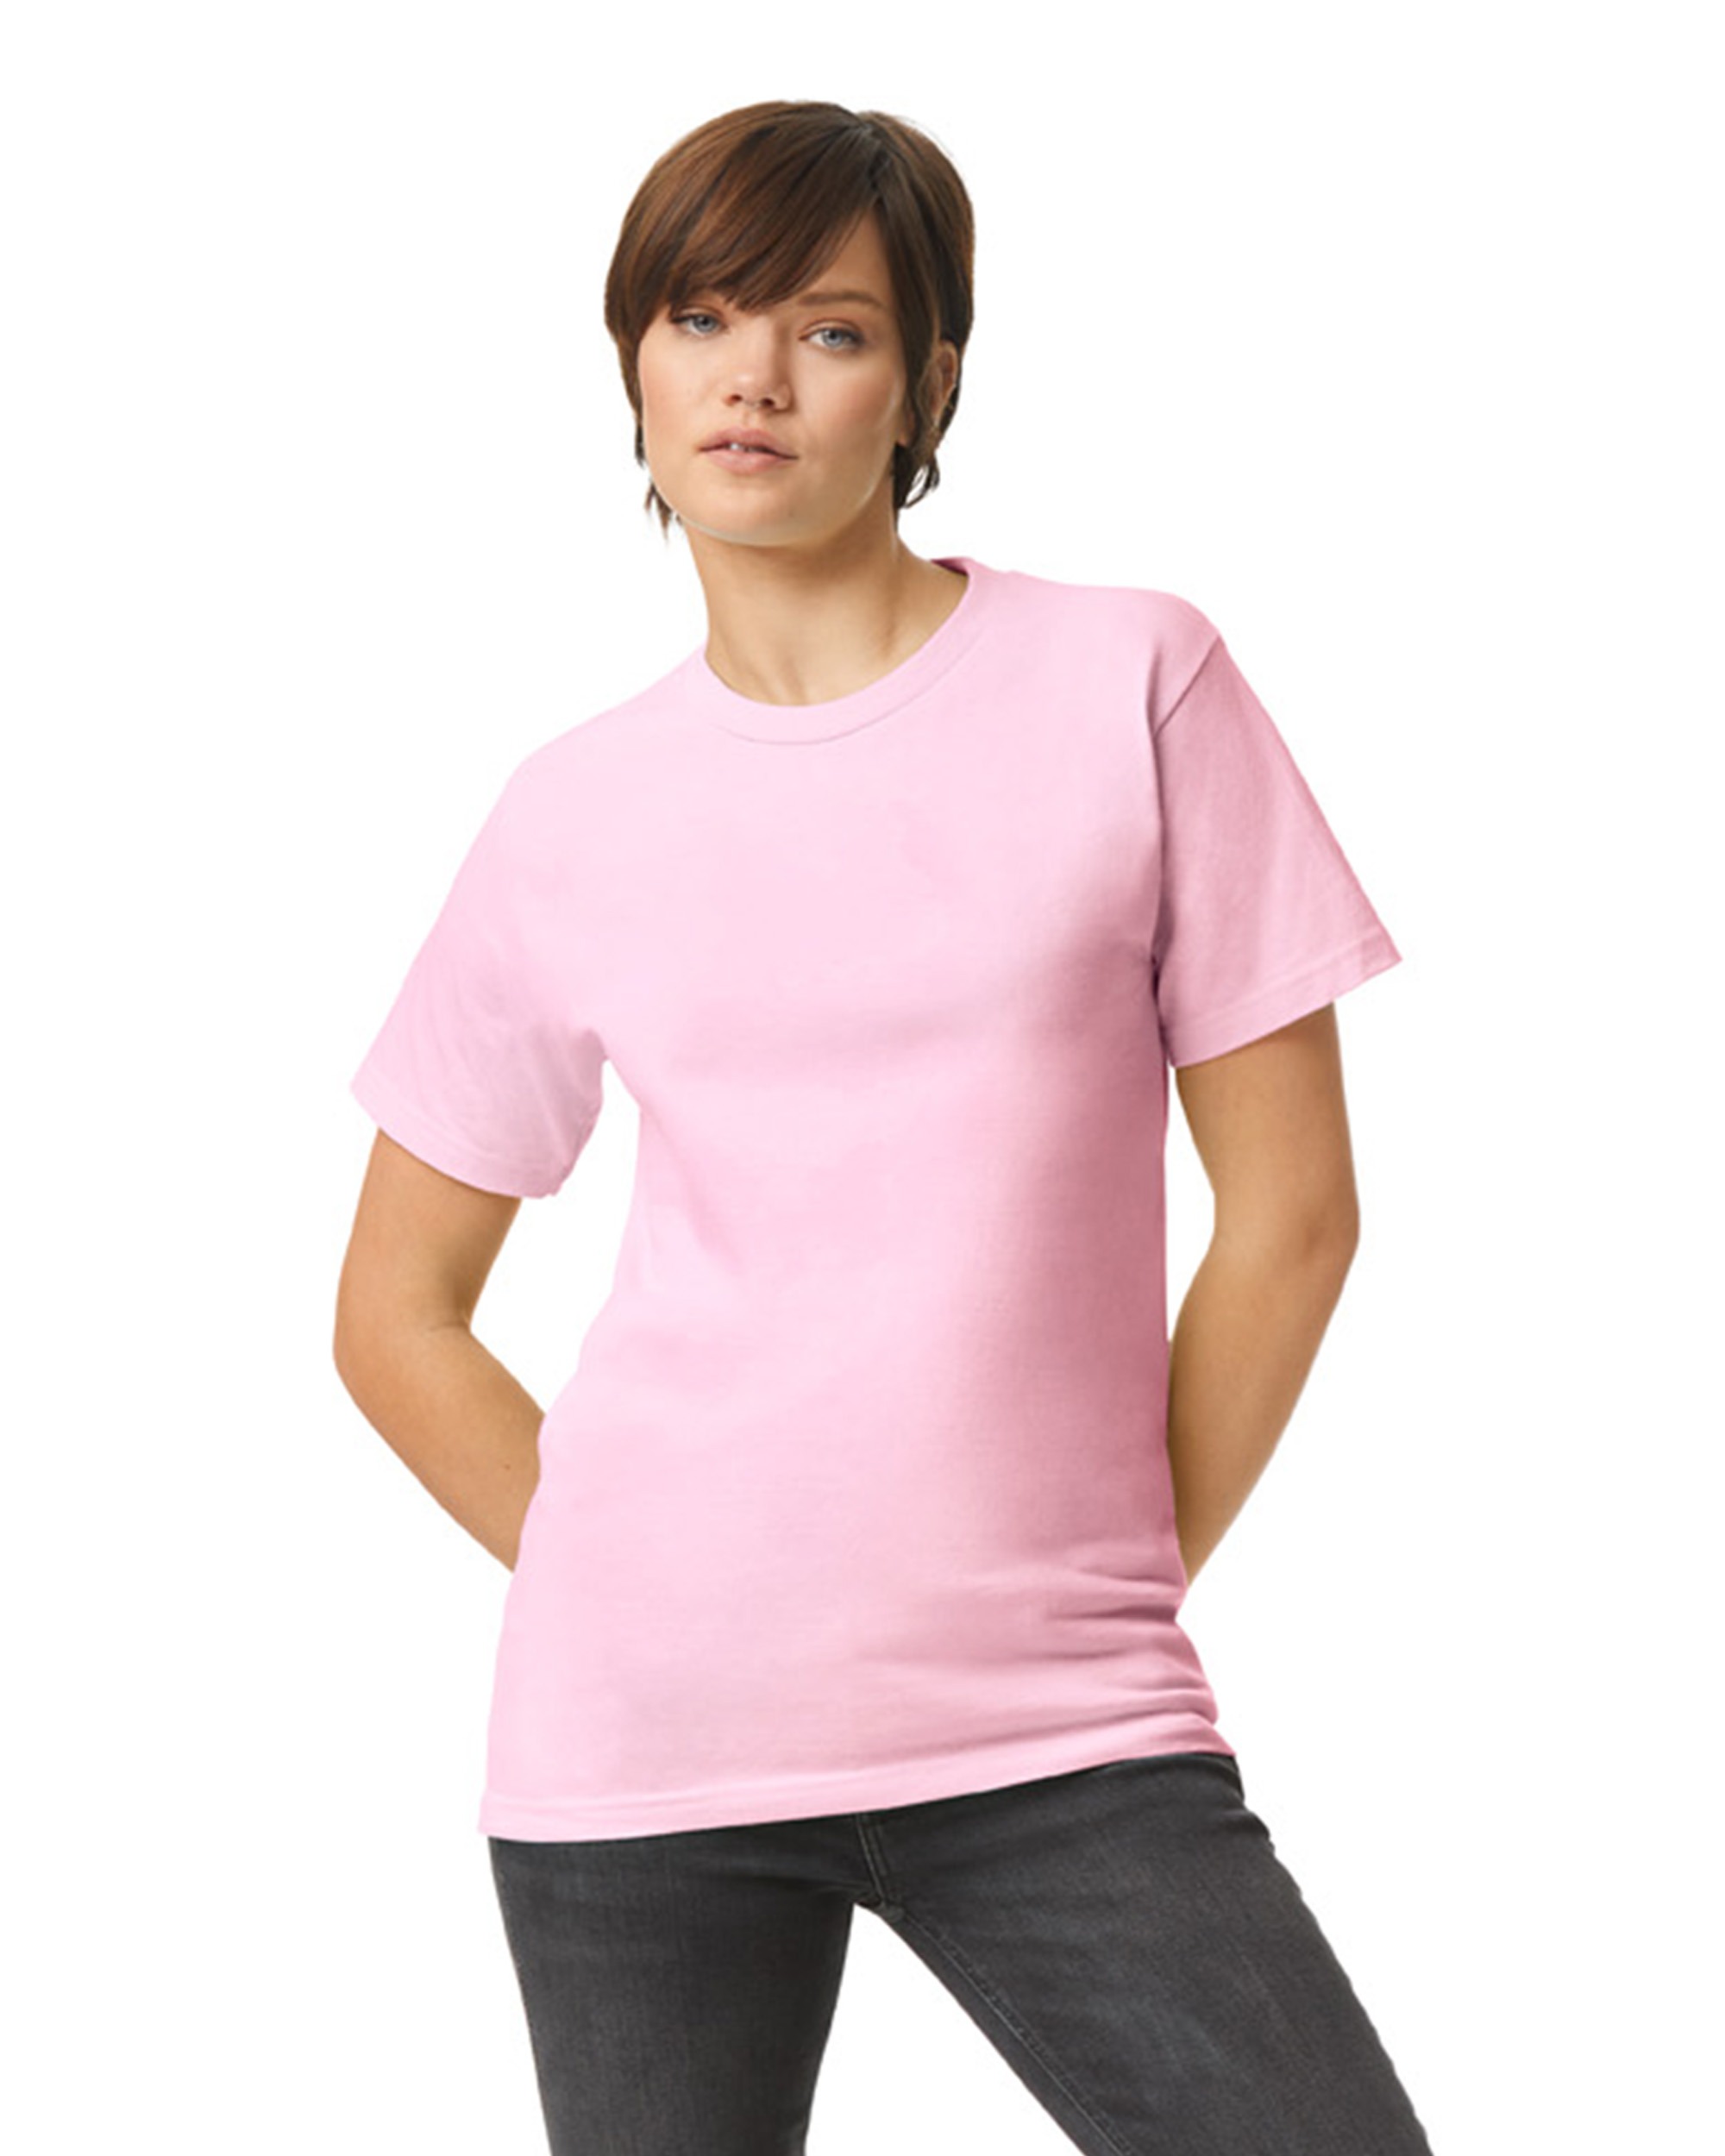 American Apparel® 1301 Heavyweight Cotton Unisex T-Shirt